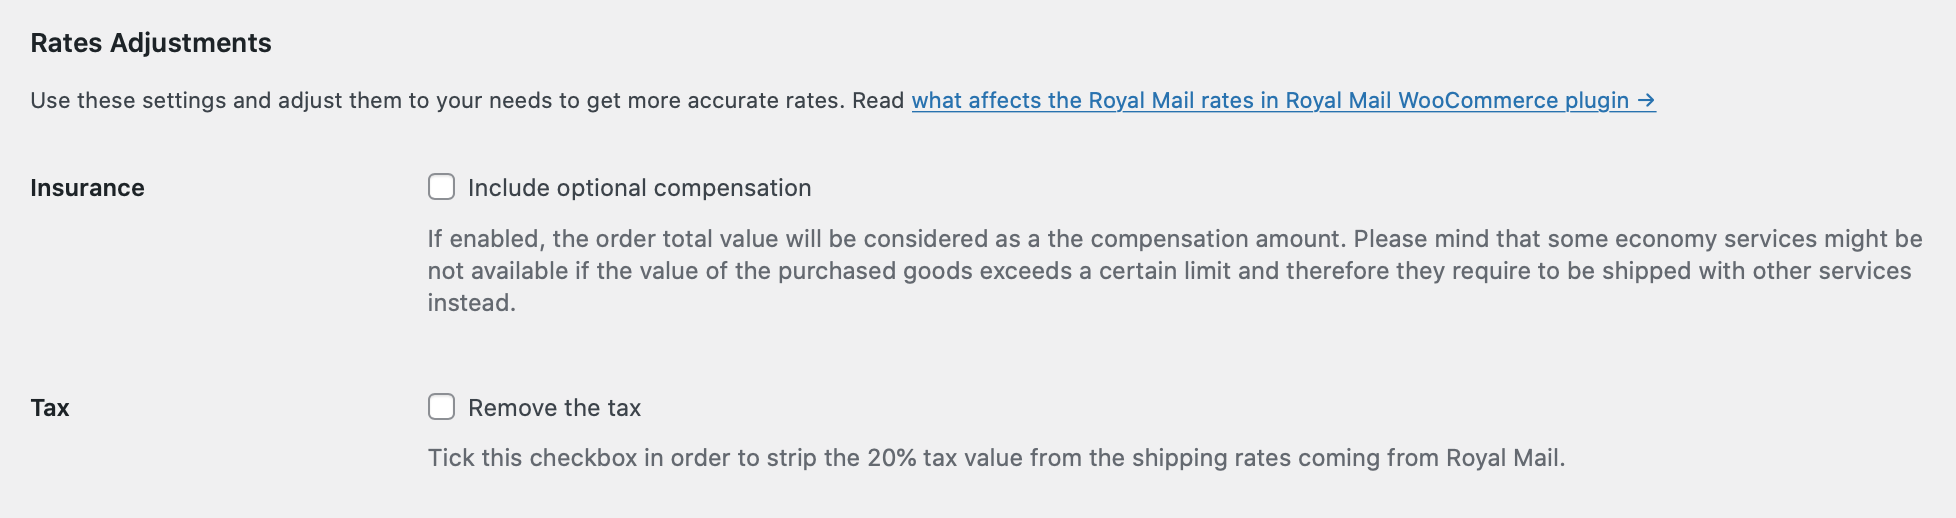 royal mail live rates adjustments